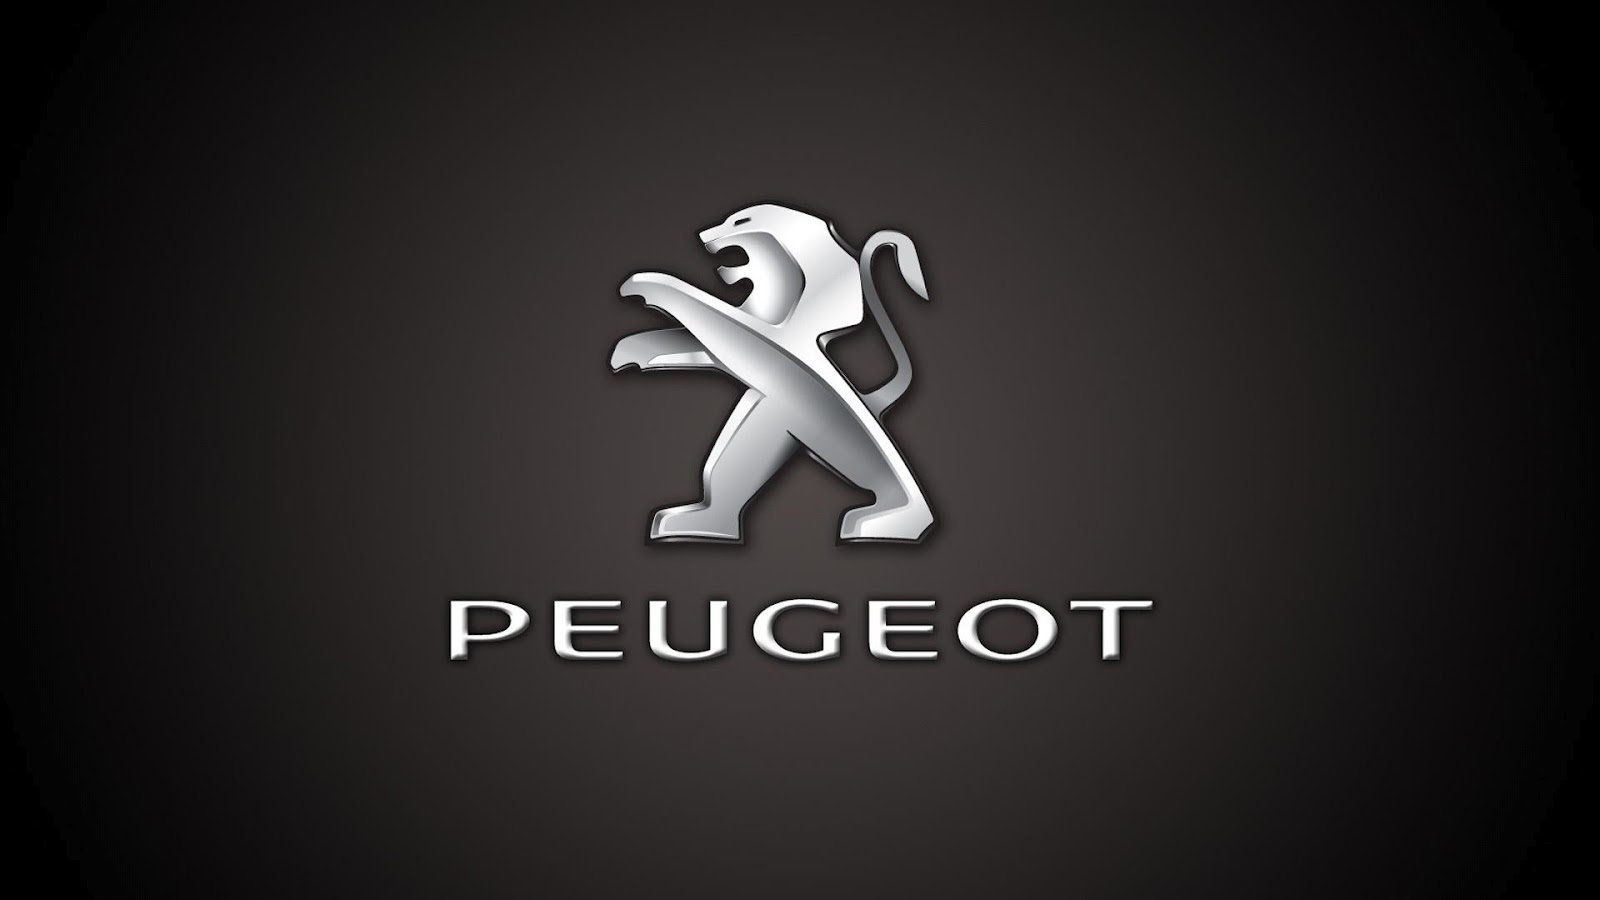 Best Peugeot wallpaper ID:329215 for High Resolution hd 1600x900 computer